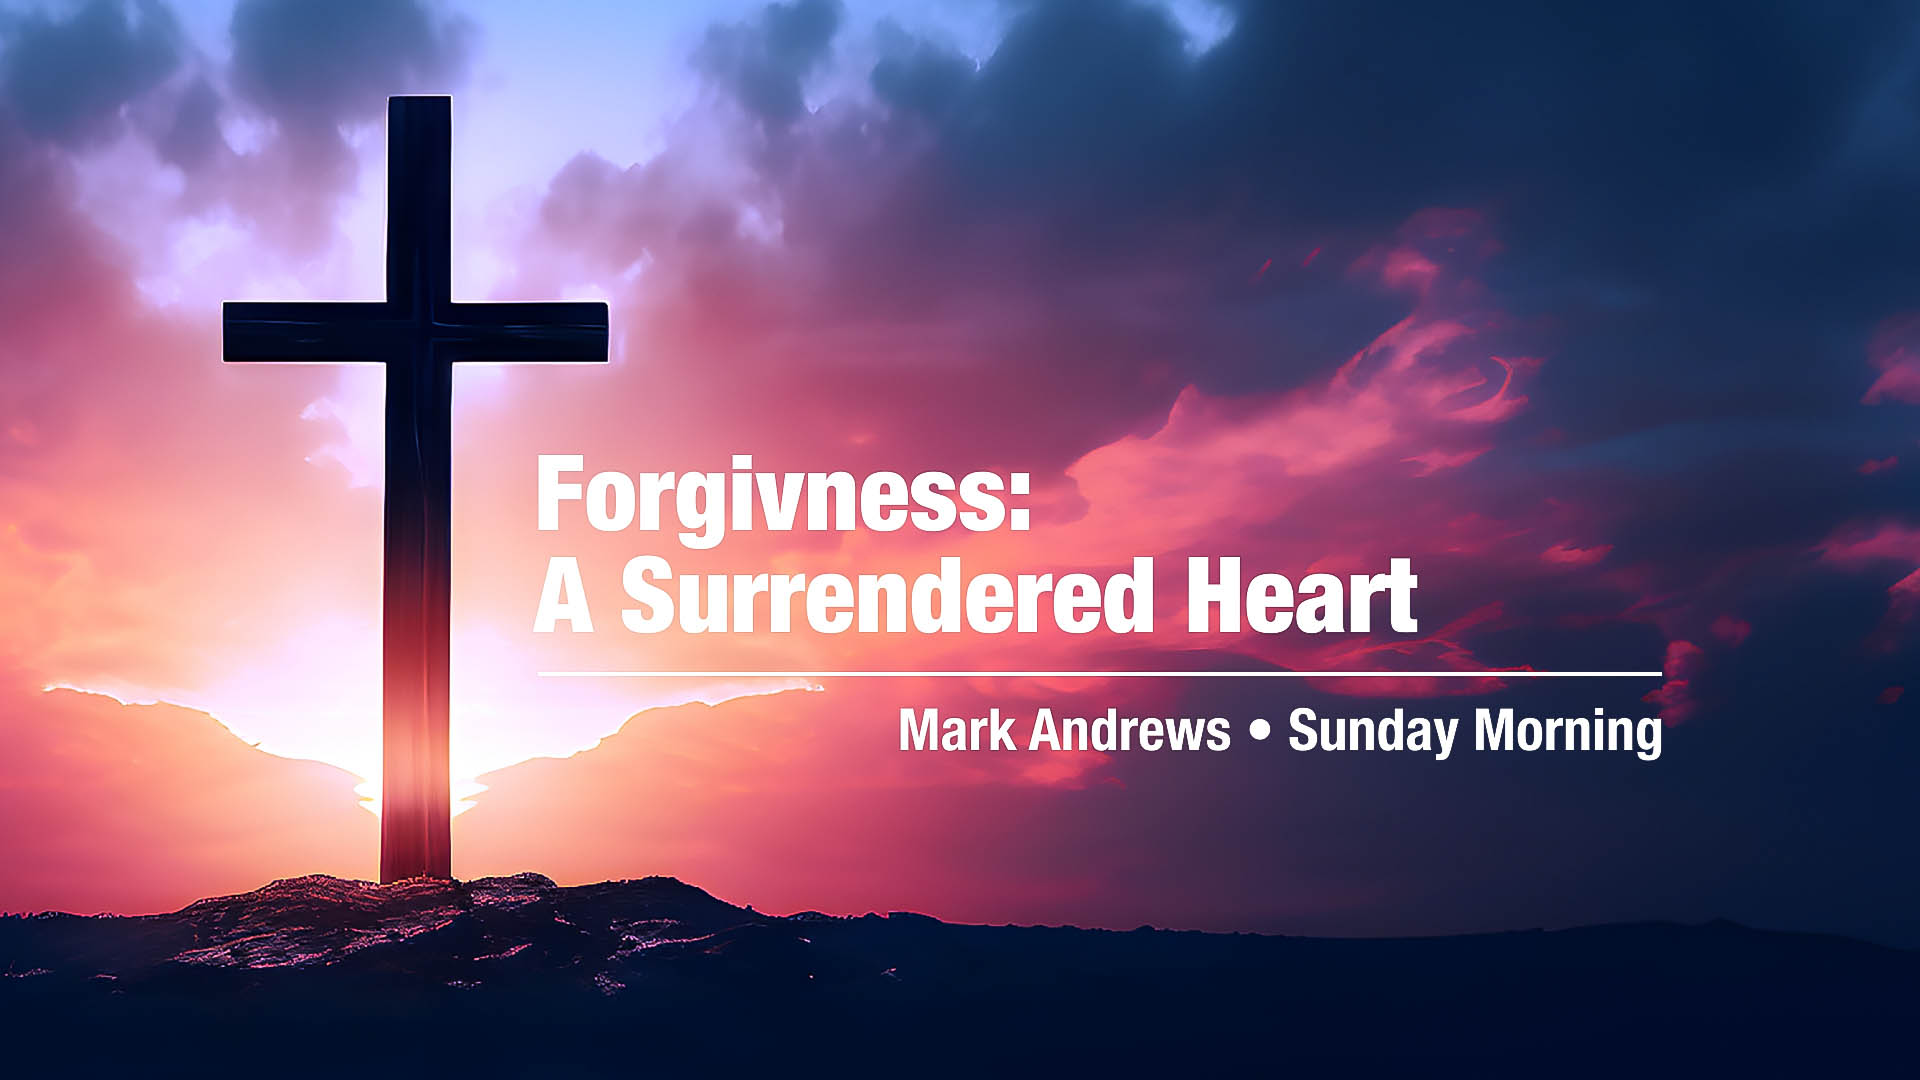 Dunkard Brethren Church| Leadership Conference | Forgiveness: A Surrendered Heart